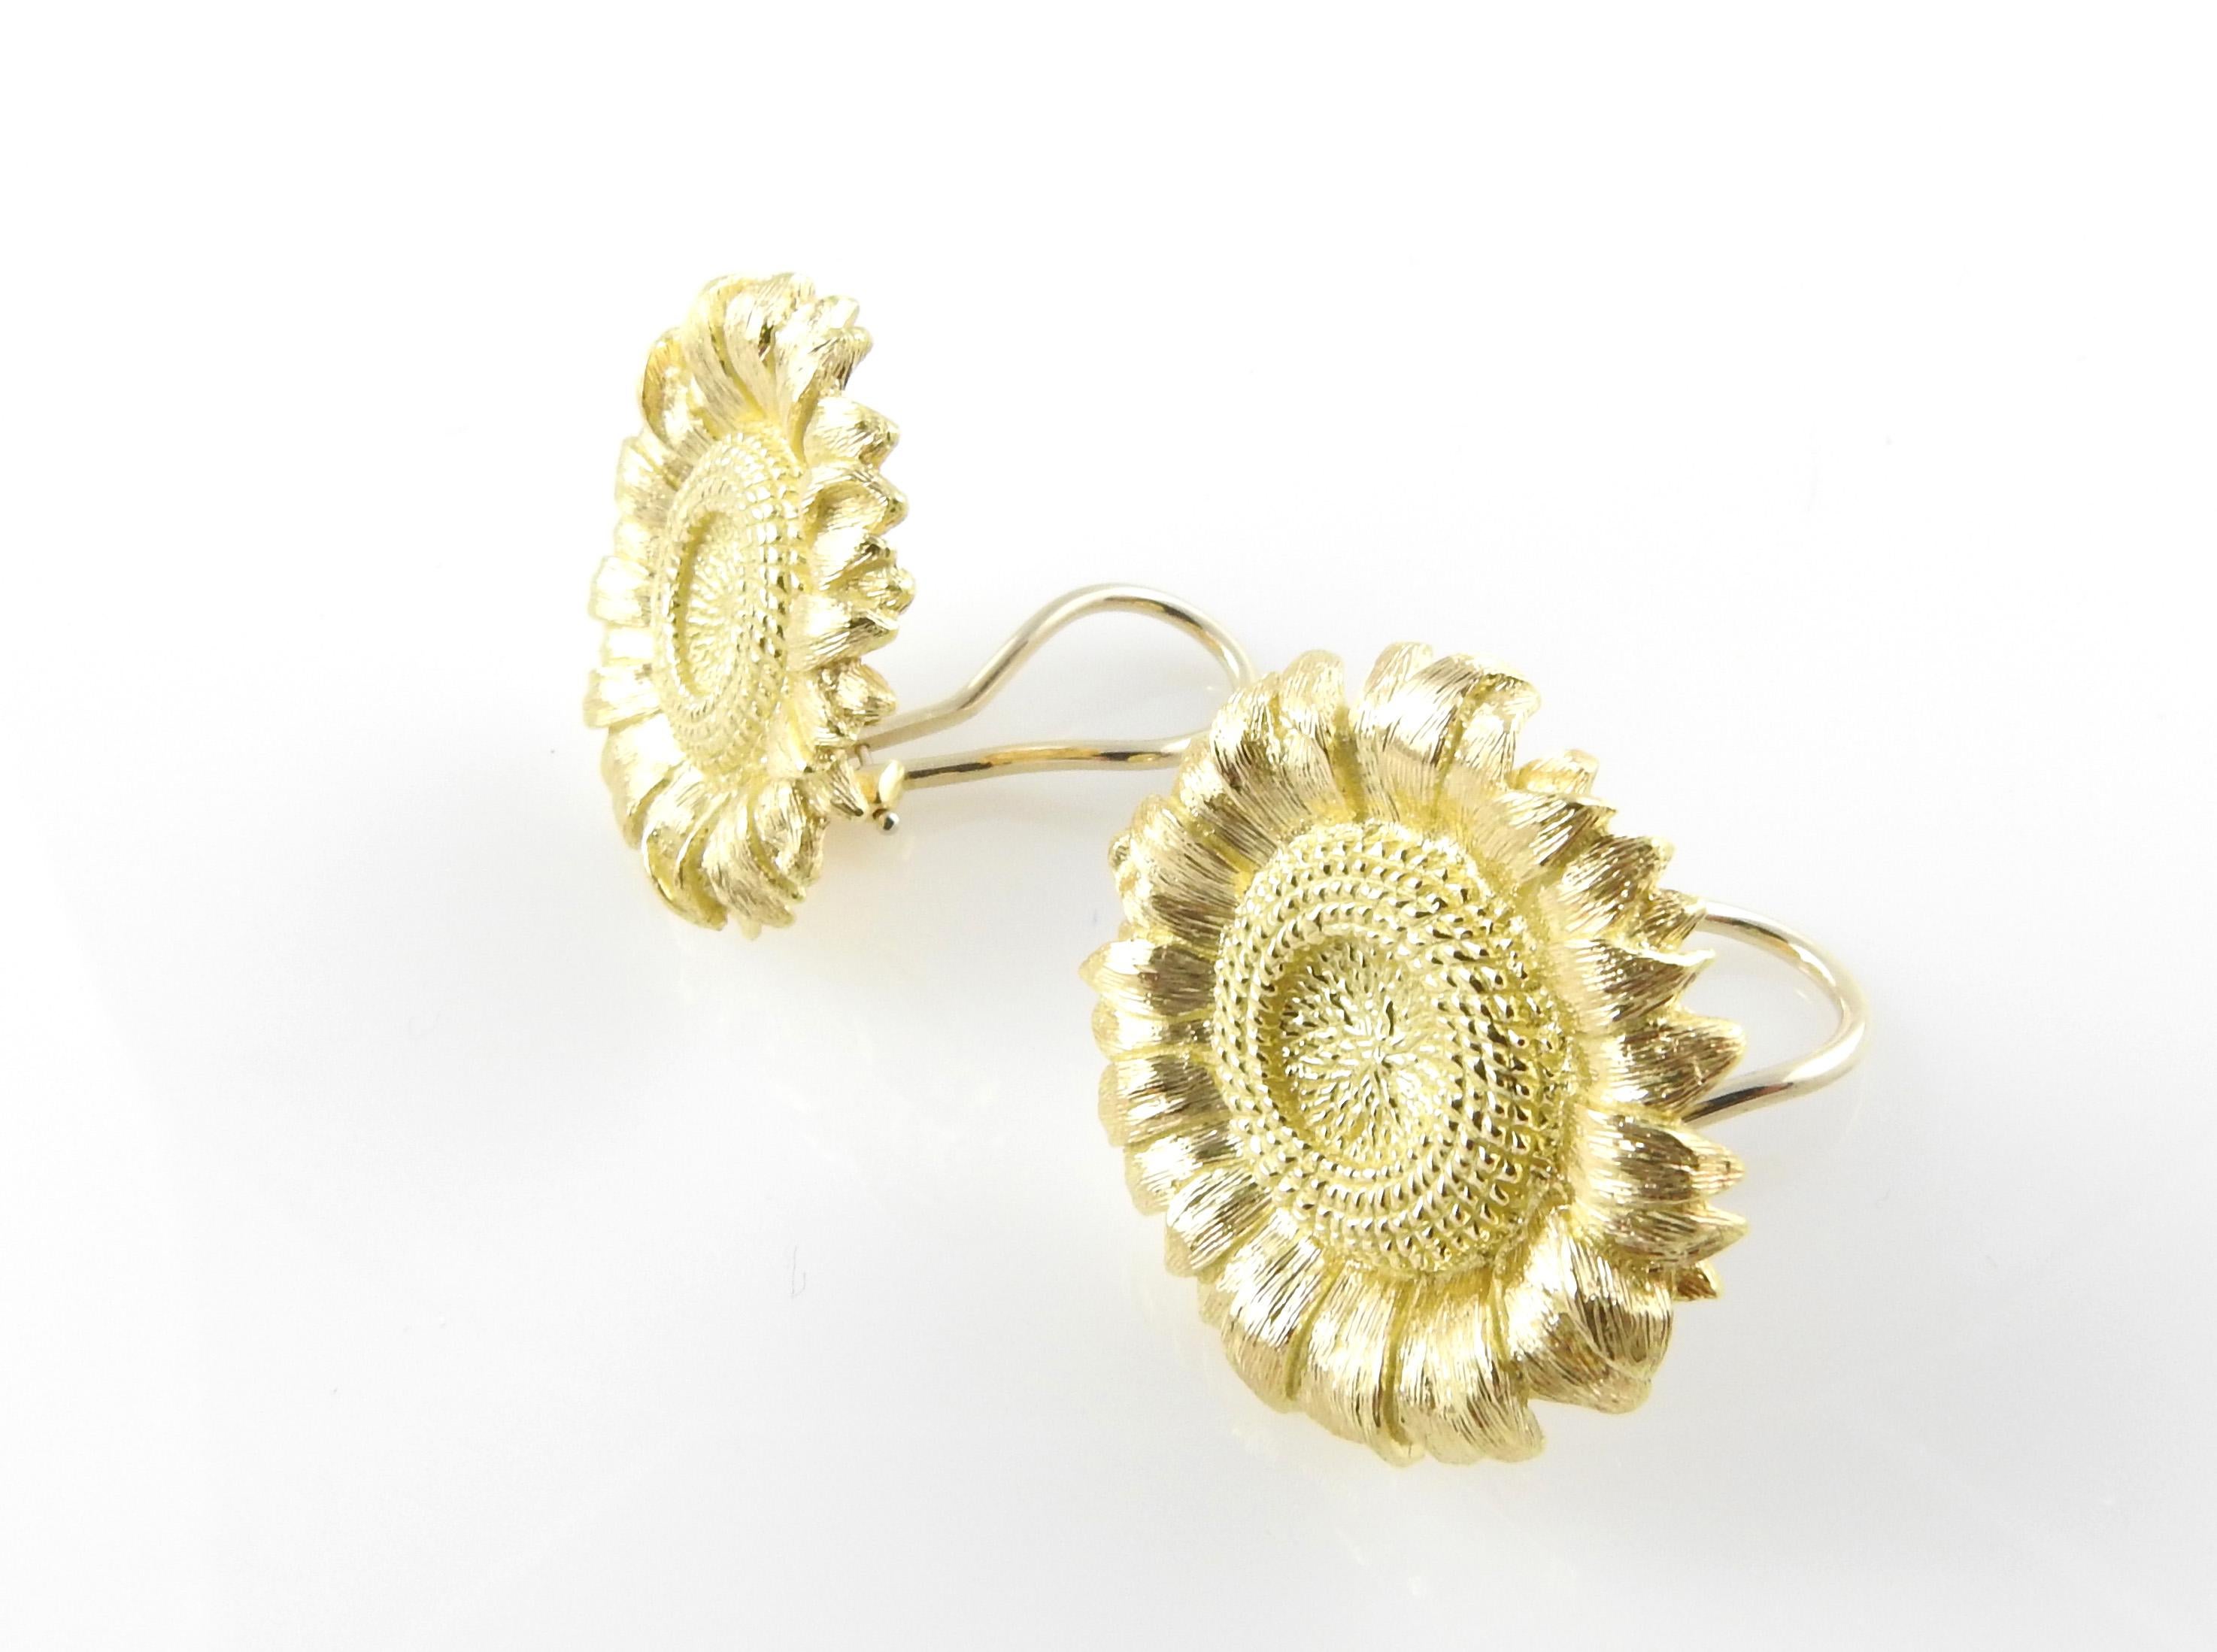 Bielka 18K Yellow Gold Sunflower Earrings

These statement earrings are approx. 1